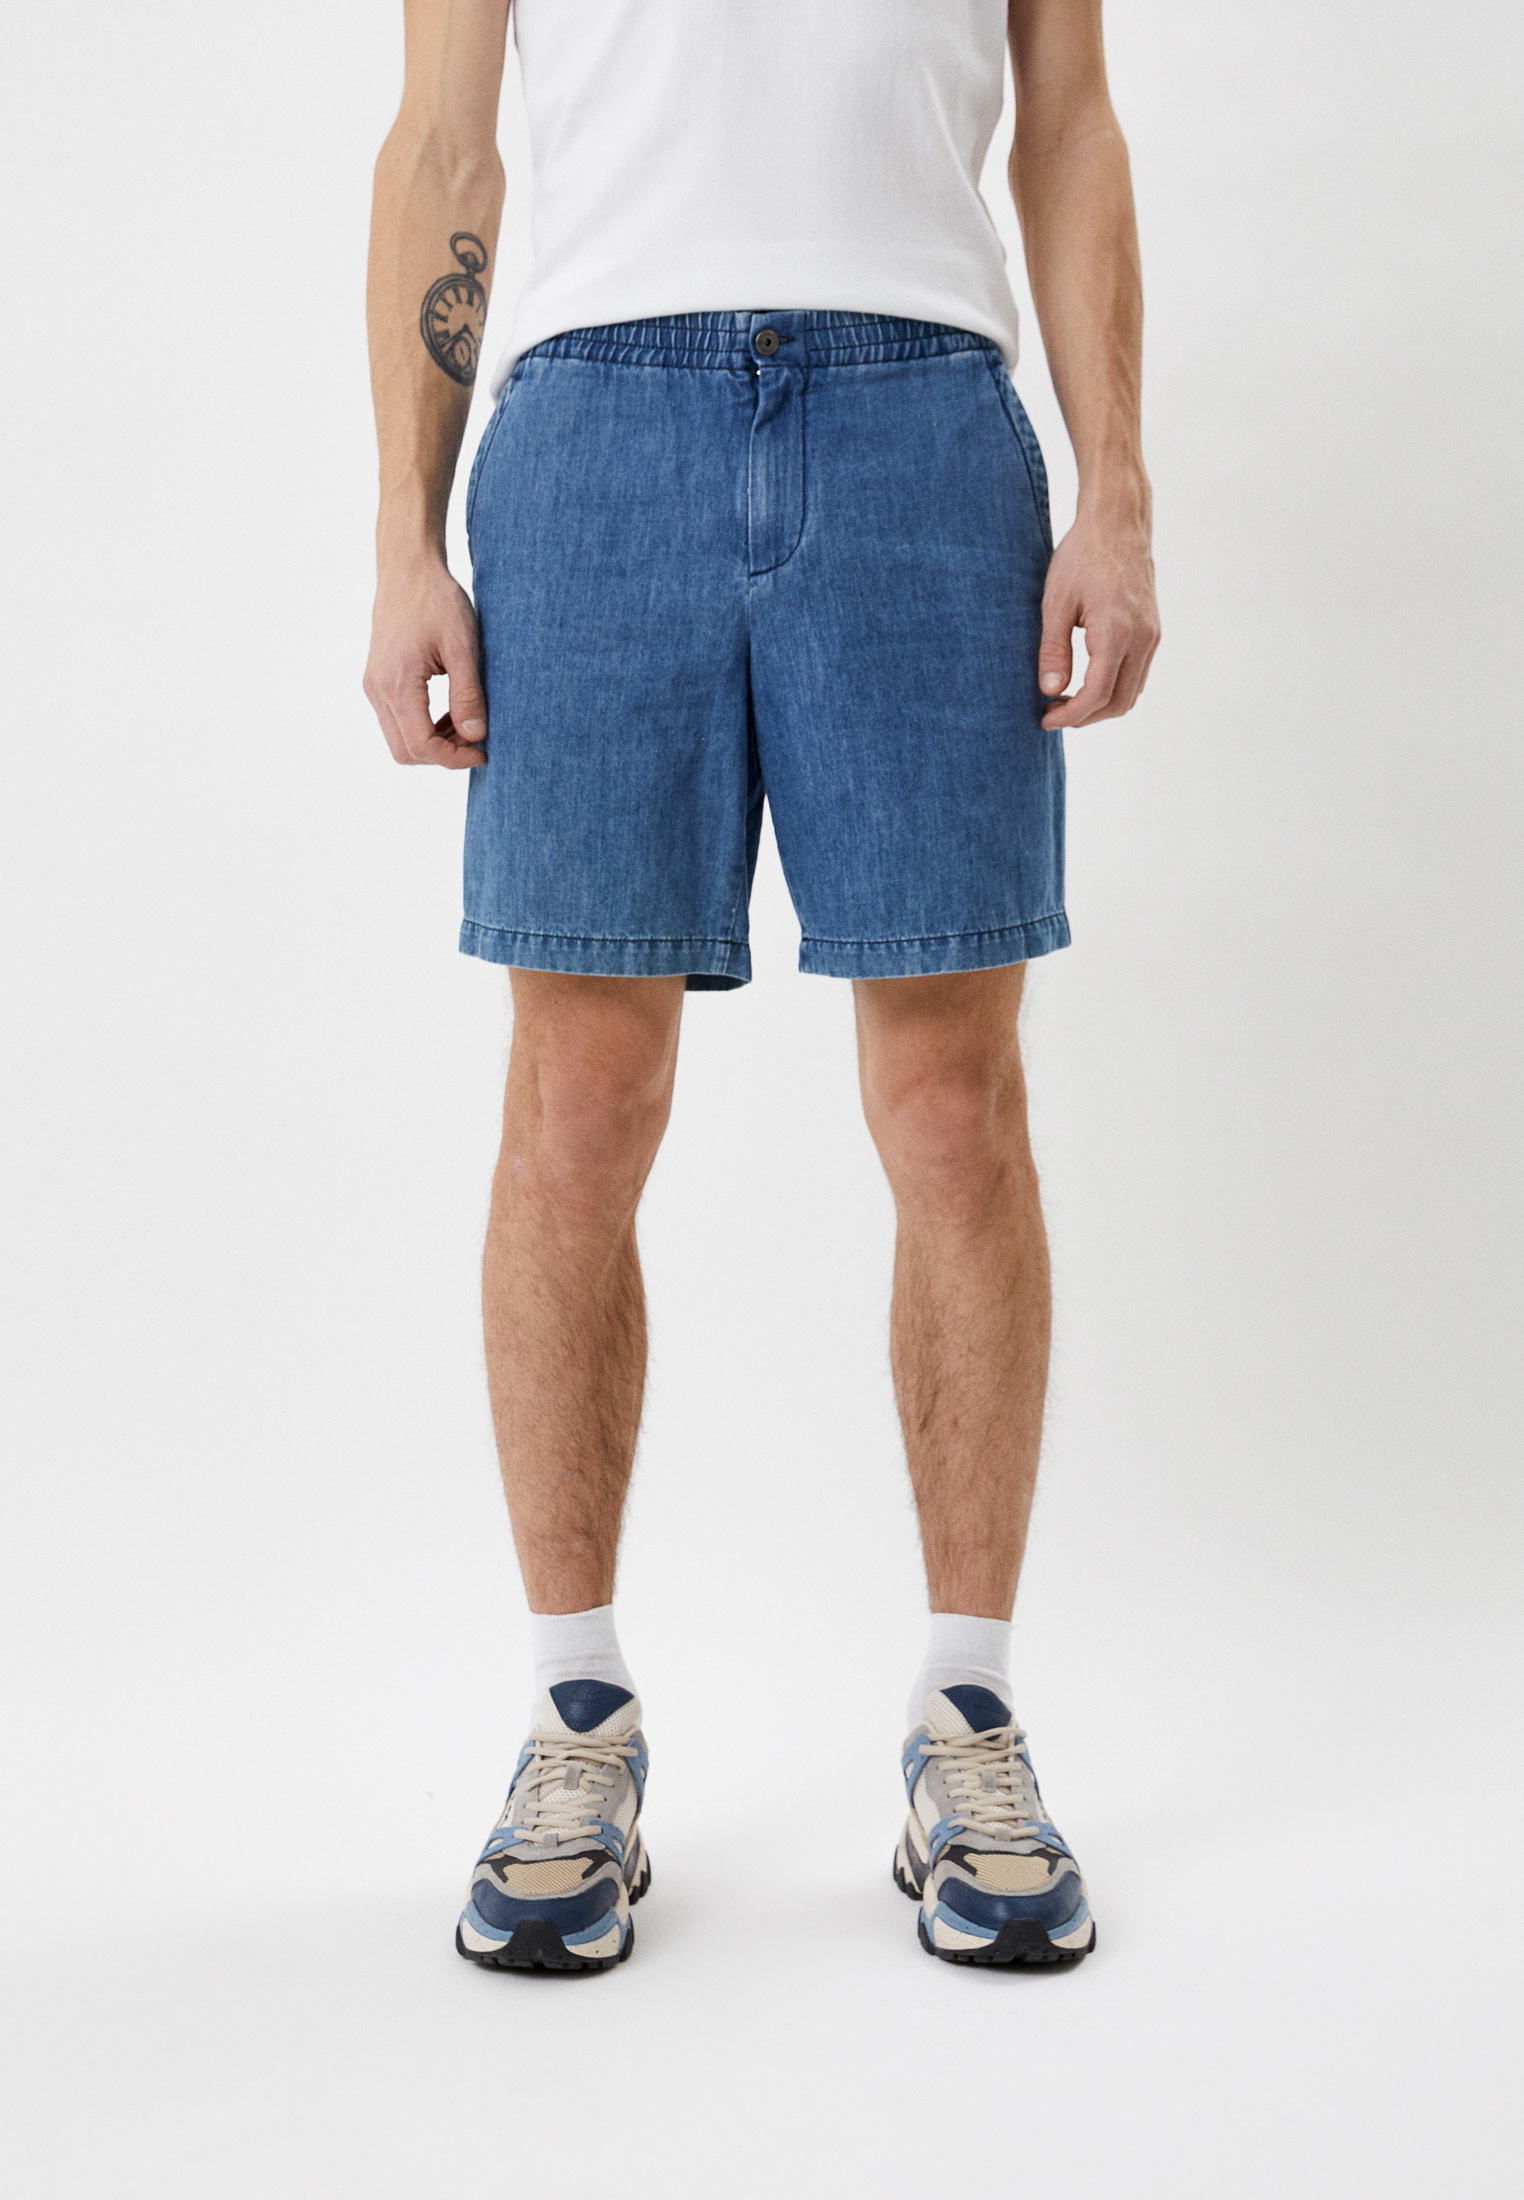 Мужские джинсовые шорты Bikkembergs (Биккембергс) CO01501T093A